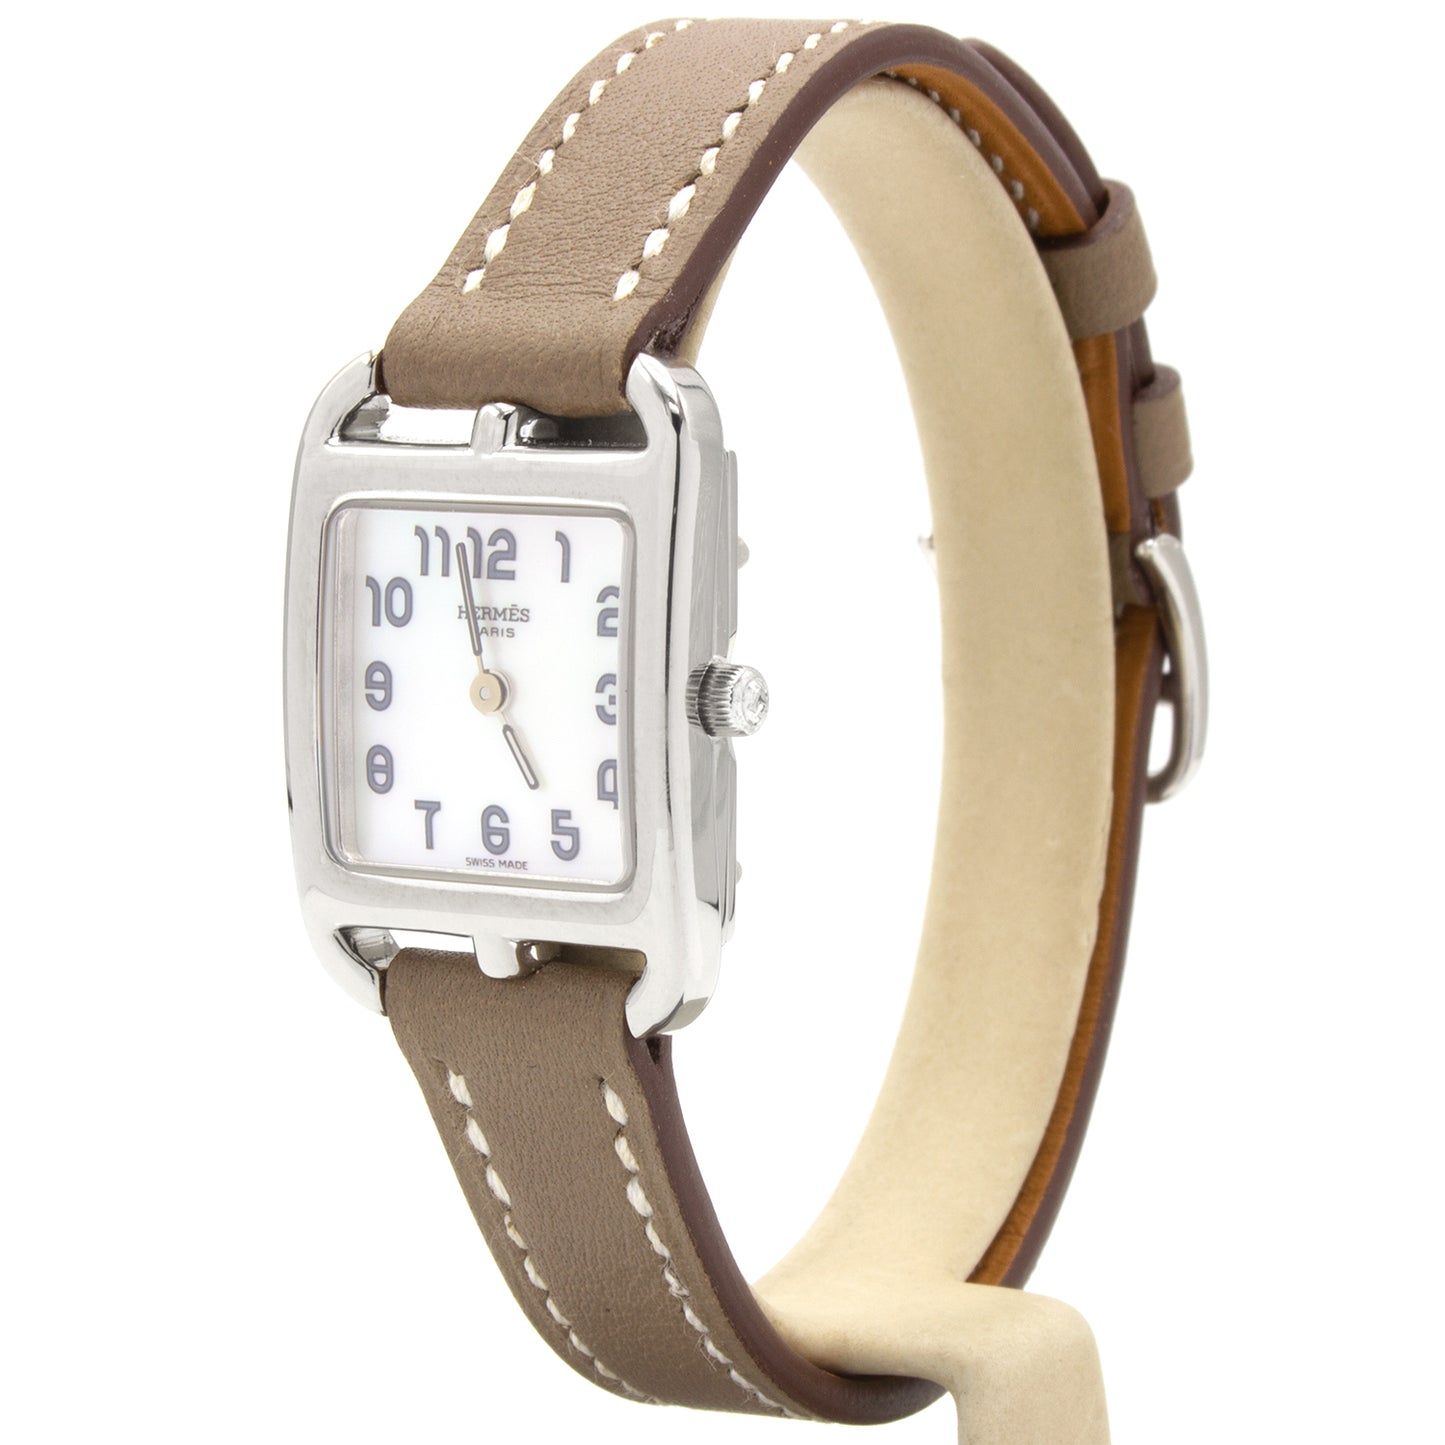 Hermes Cape Cod CC1.190 18K white gold watch